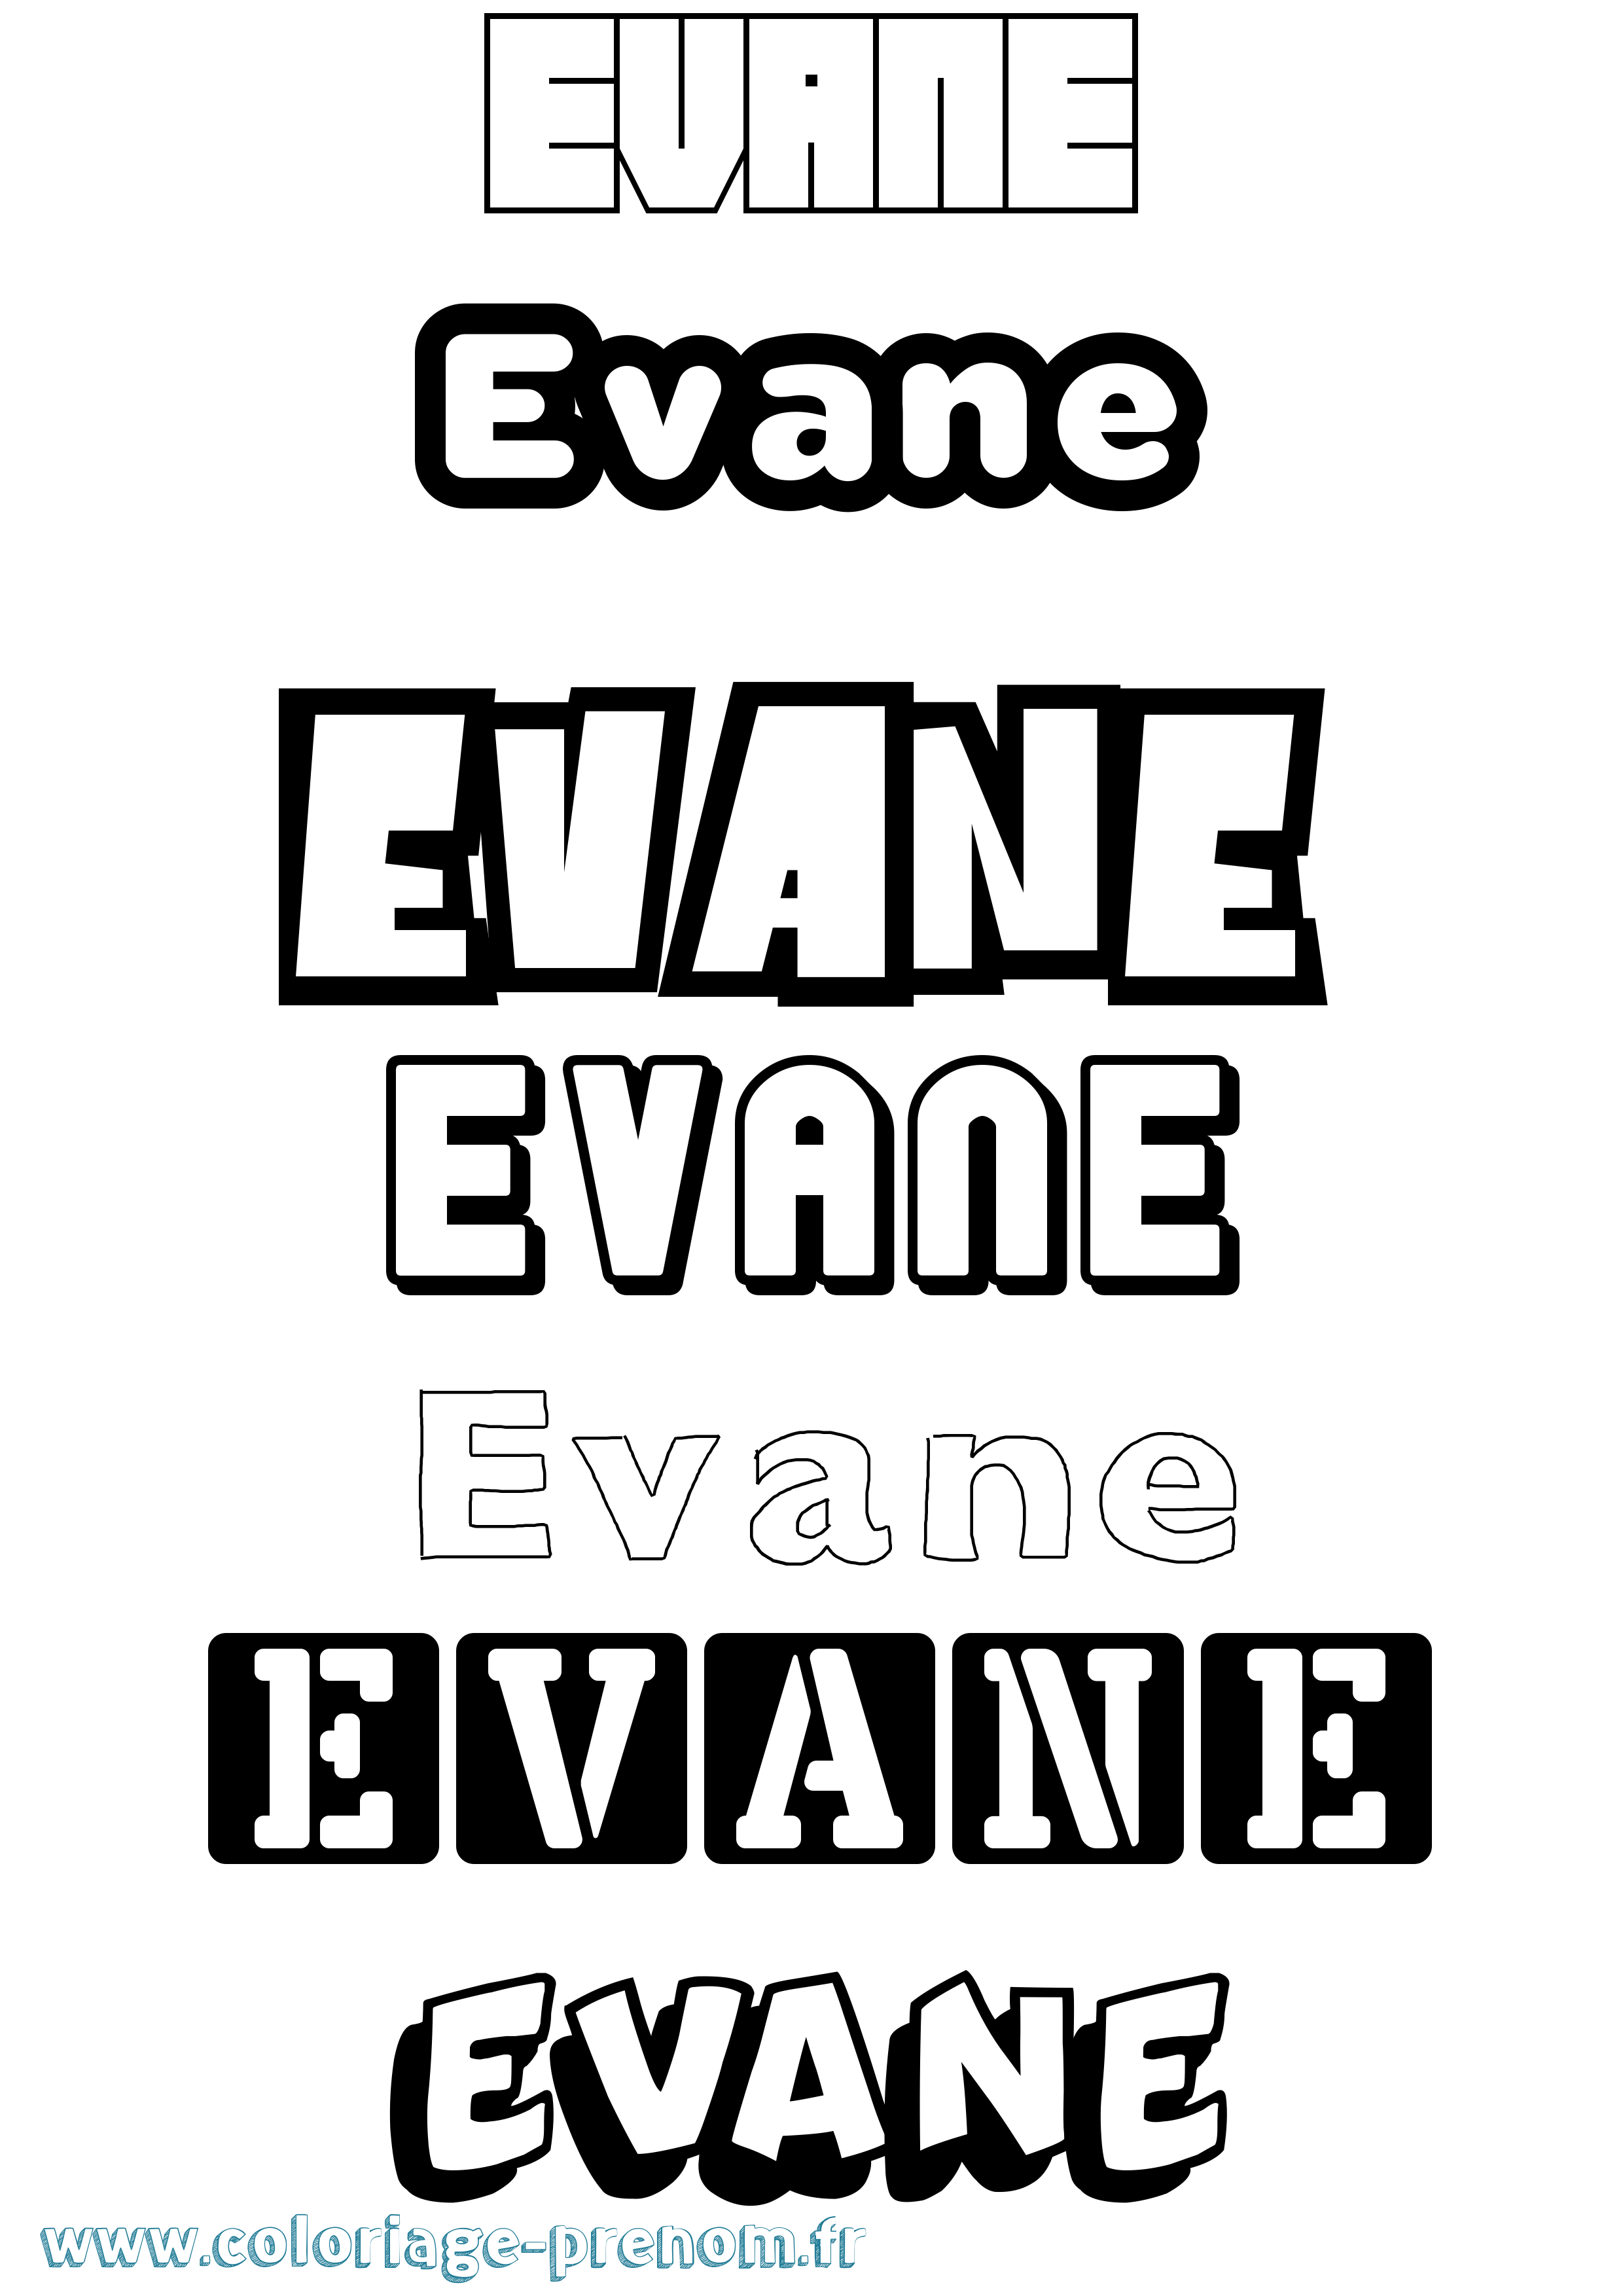 Coloriage prénom Evane Simple